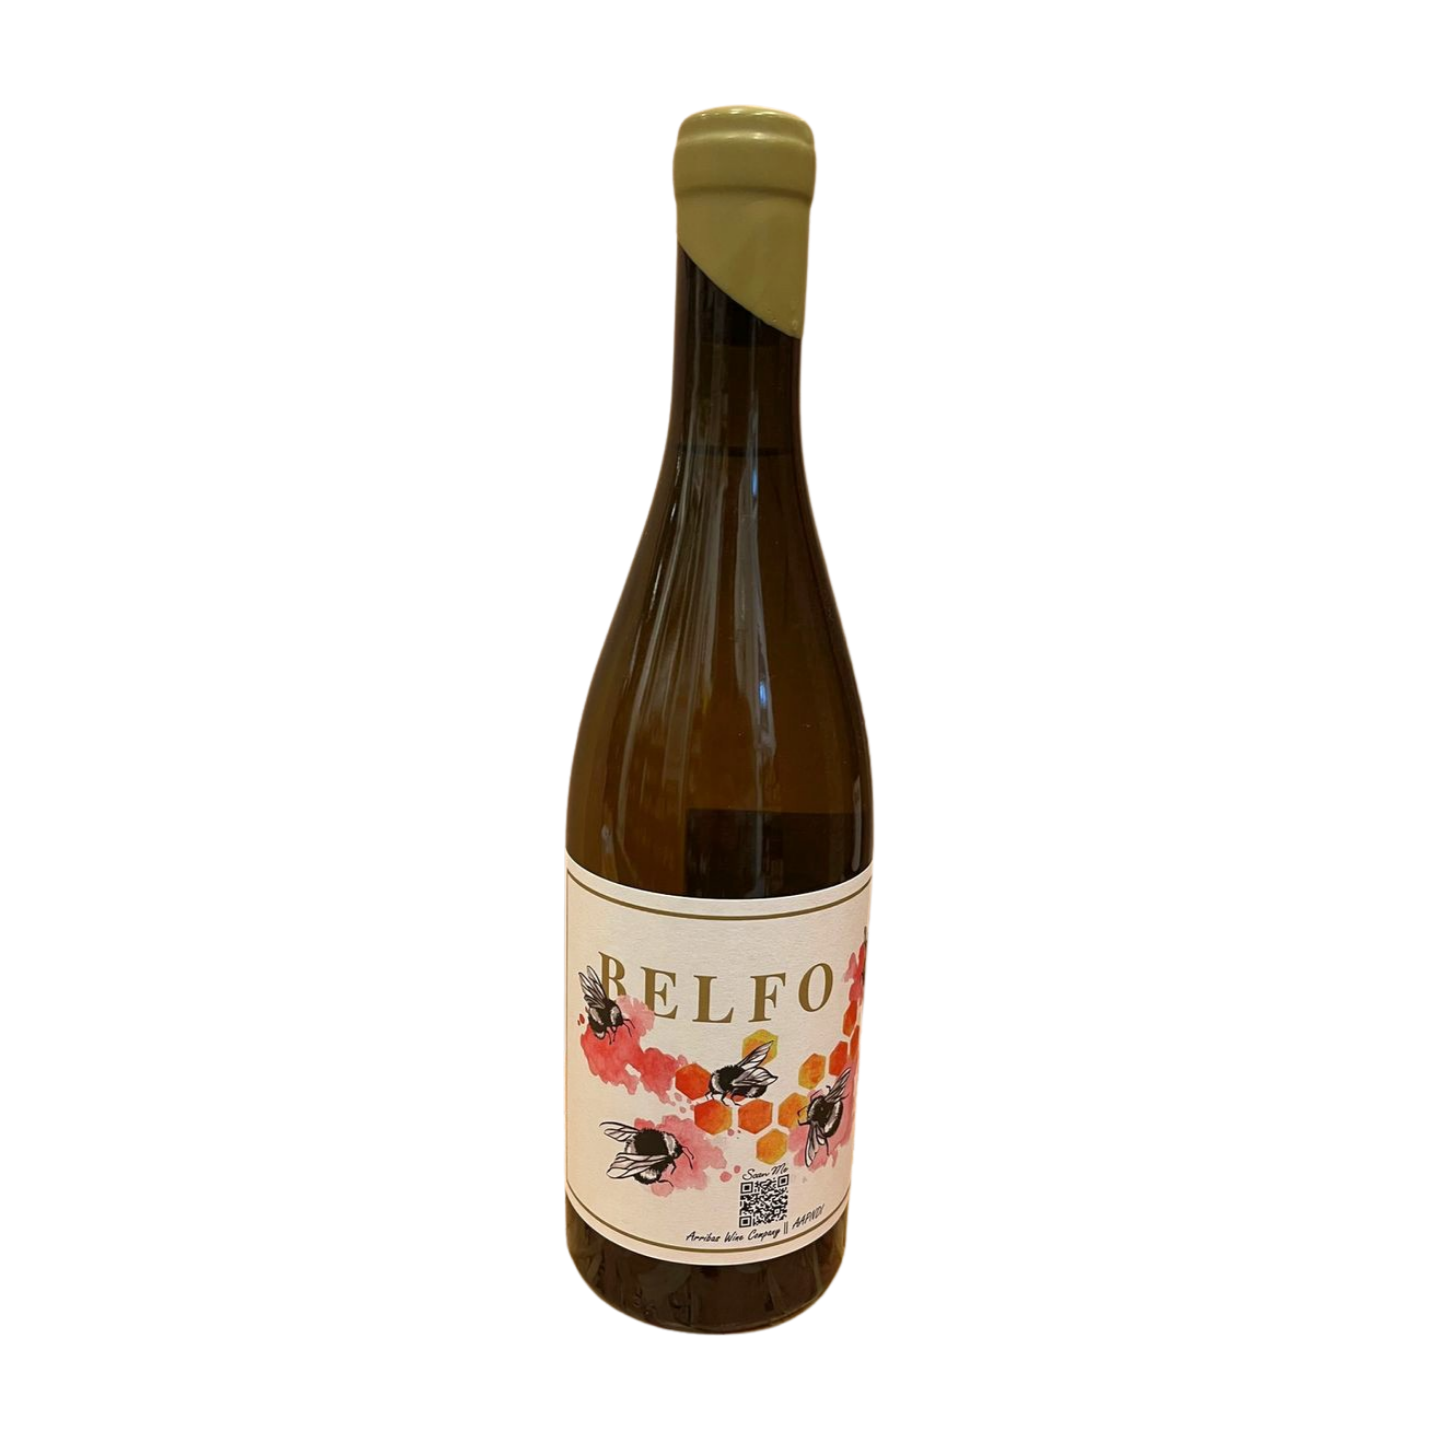 Arribas Wine Company - 2021 - Belfo Bees